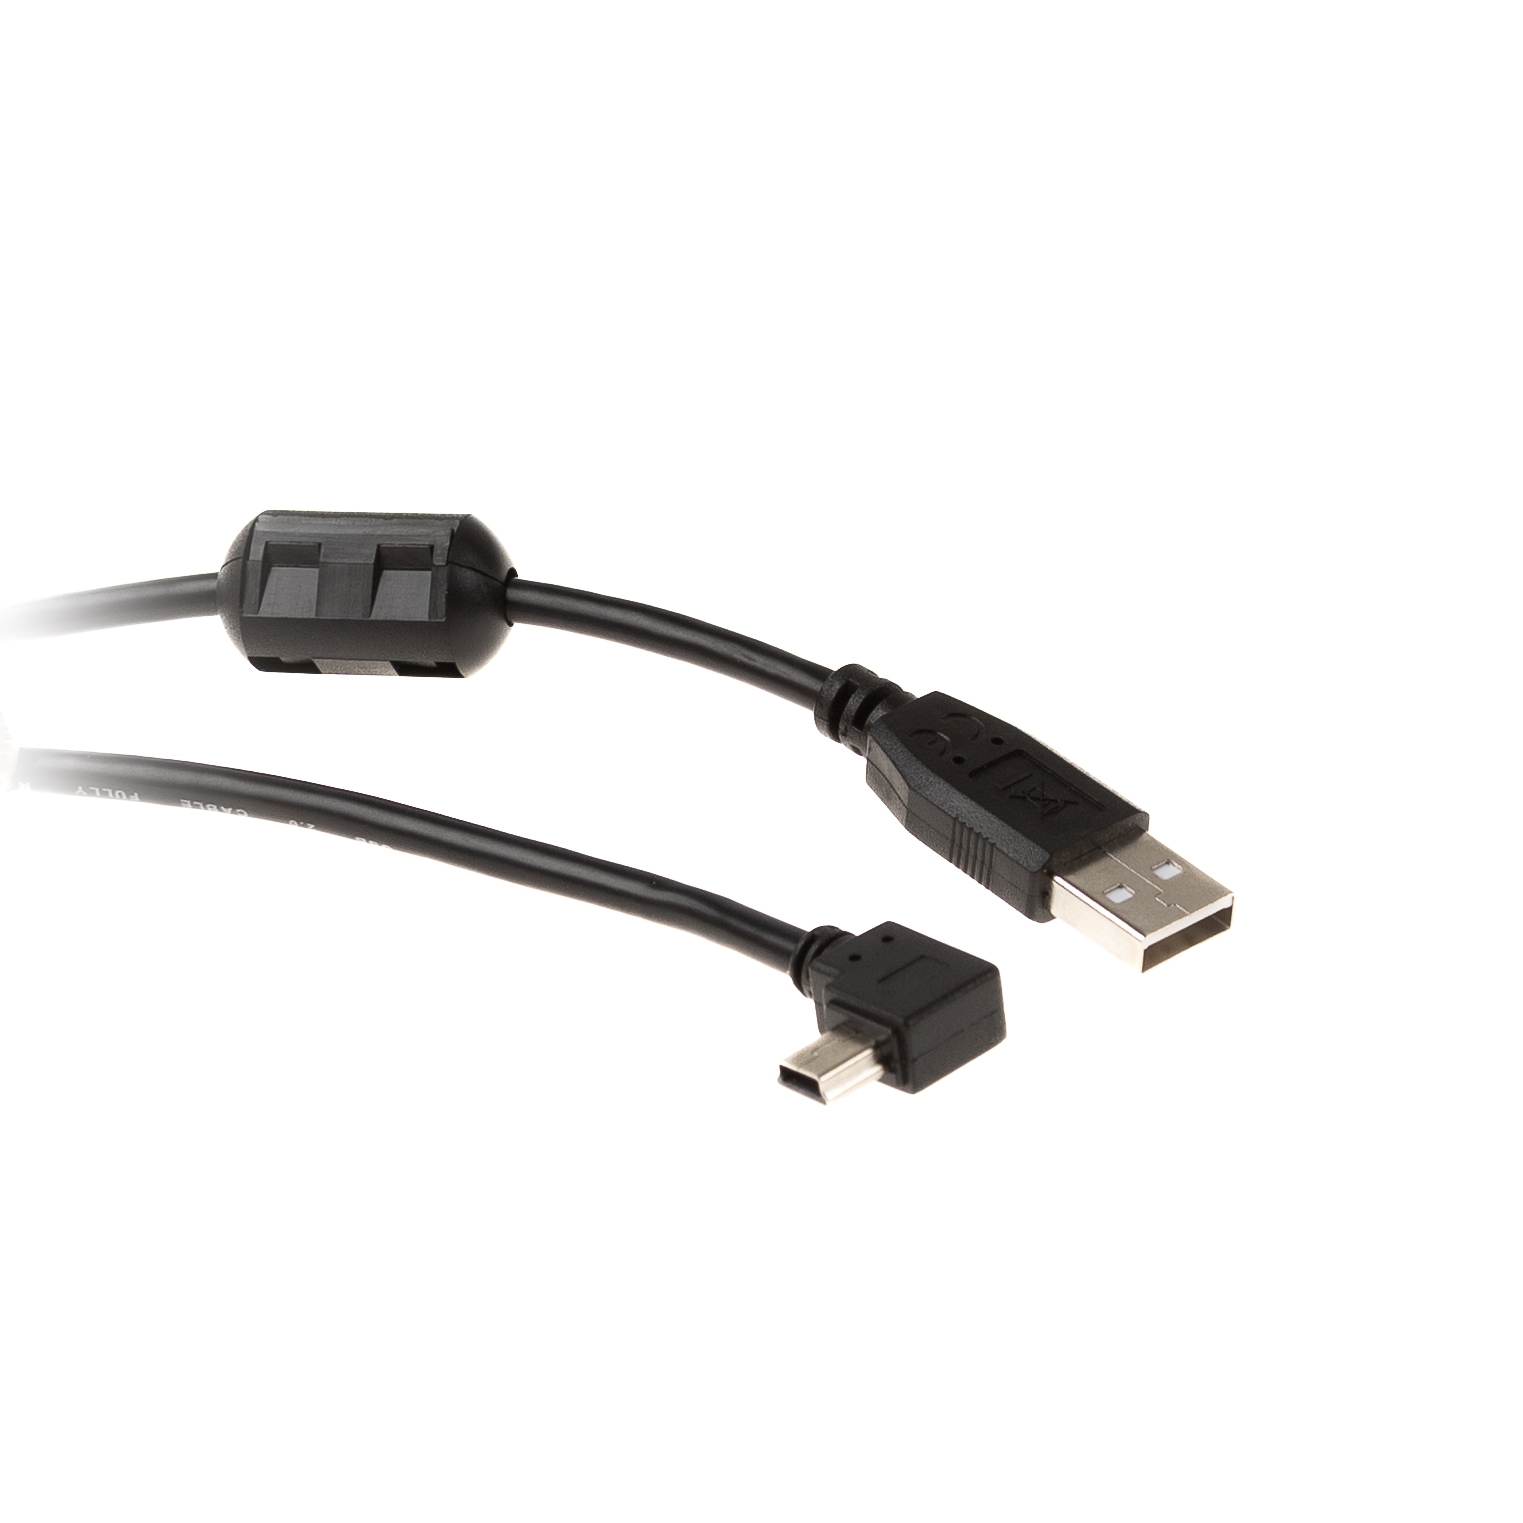 Angled MINI USB cable: USB A to Mini B ANGLED RIGHT 2m with 1 ferrit core